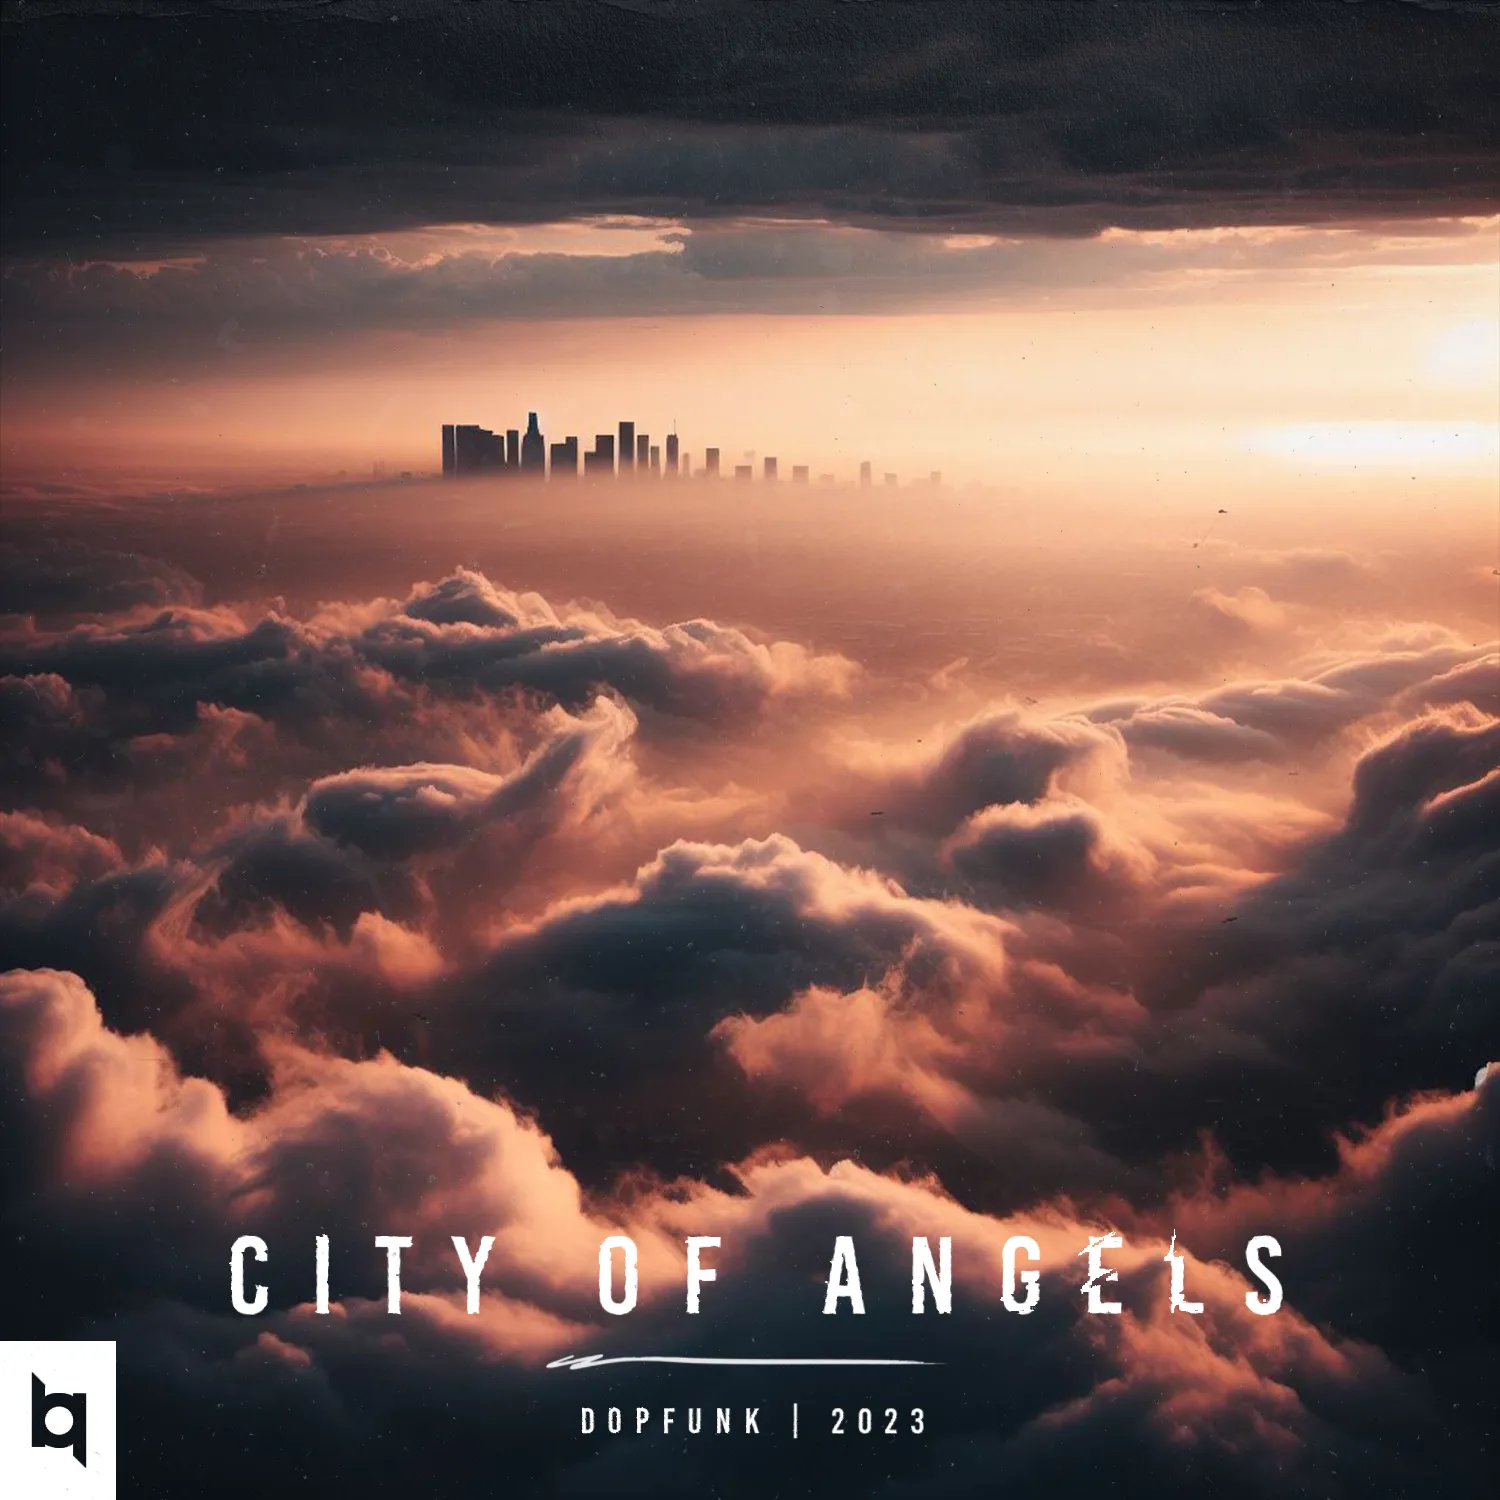 08. City of Angels